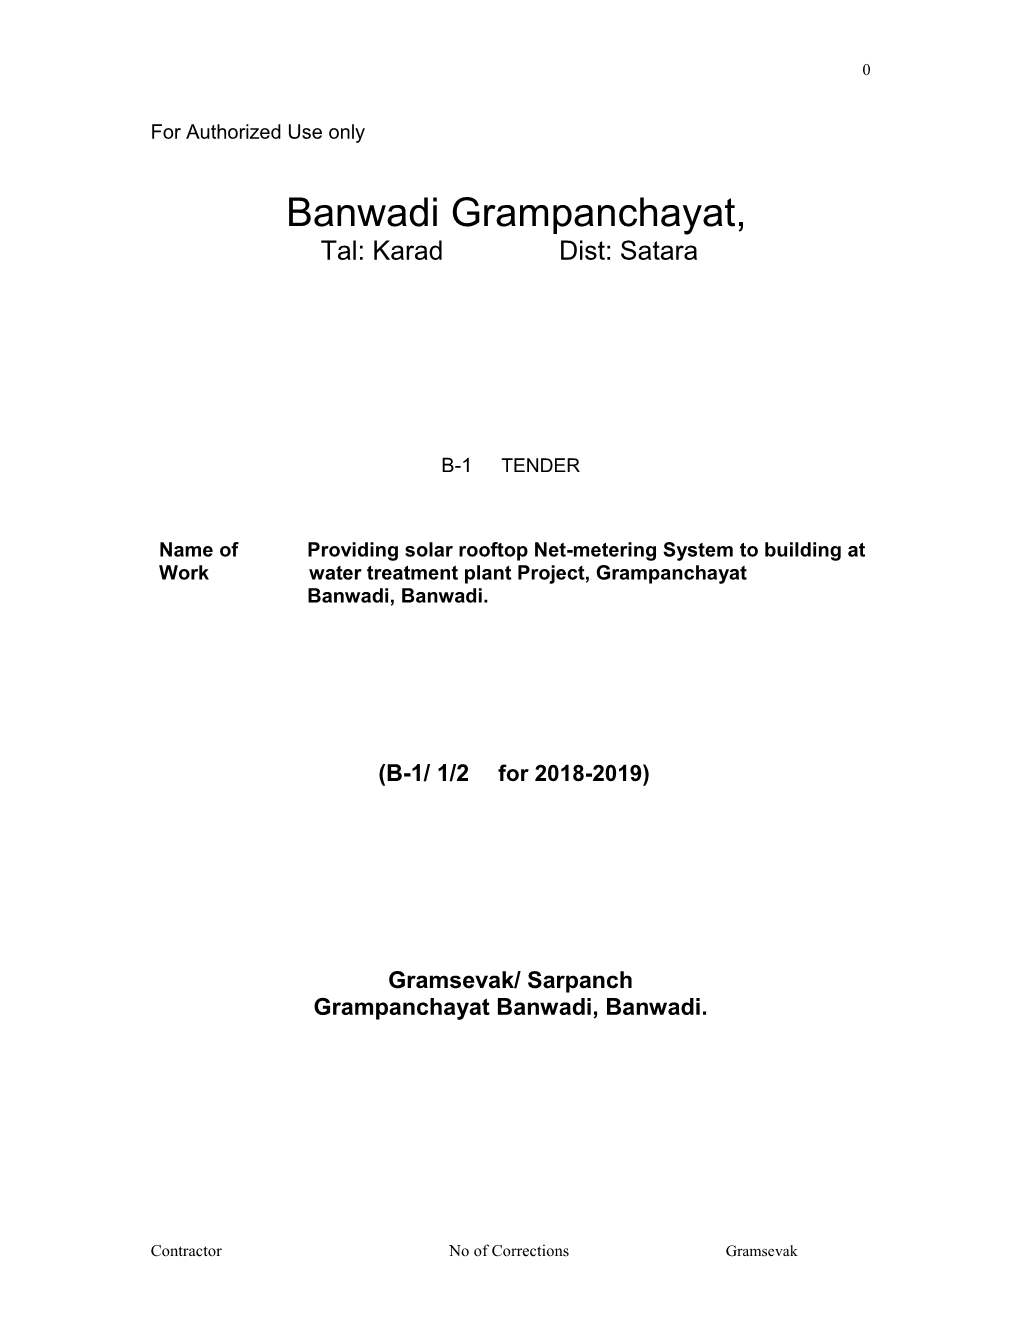 Banwadi Grampanchayat, Tal: Karad Dist: Satara